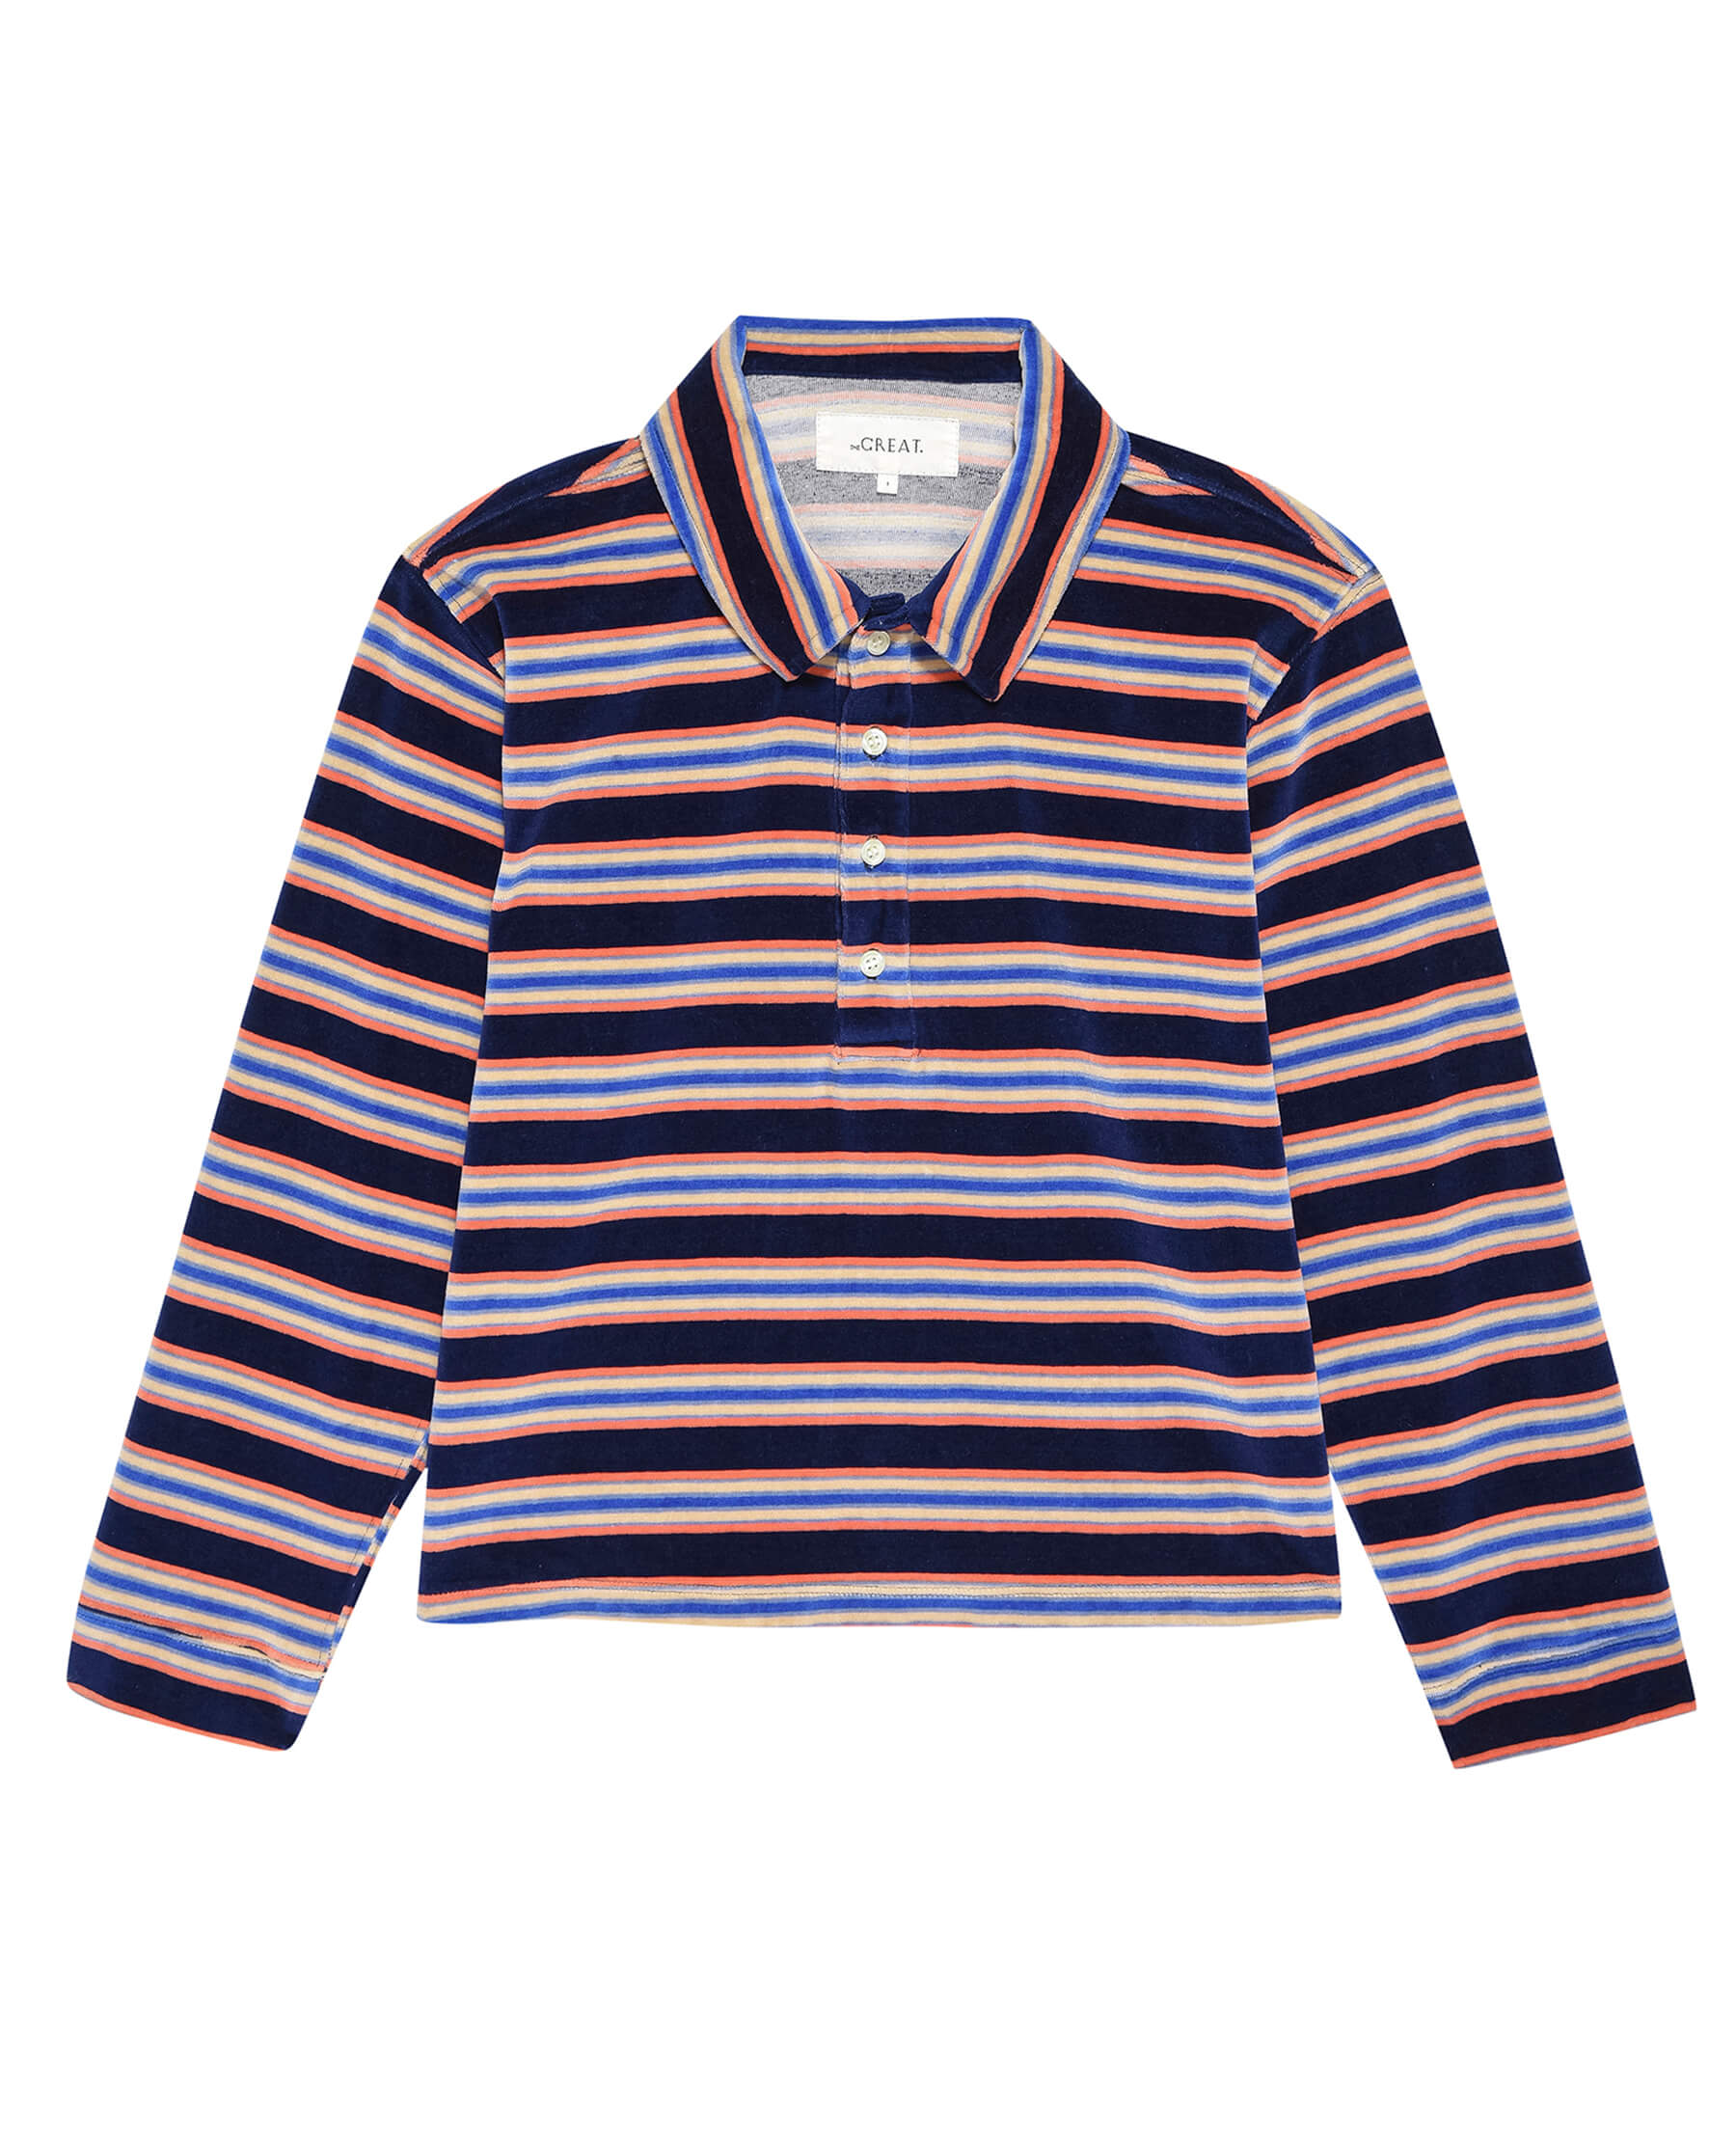 The Velour Rugby Sweatshirt. -- Scrimmage Stripe SWEATSHIRTS THE GREAT. HOL 23 VELOUR SALE